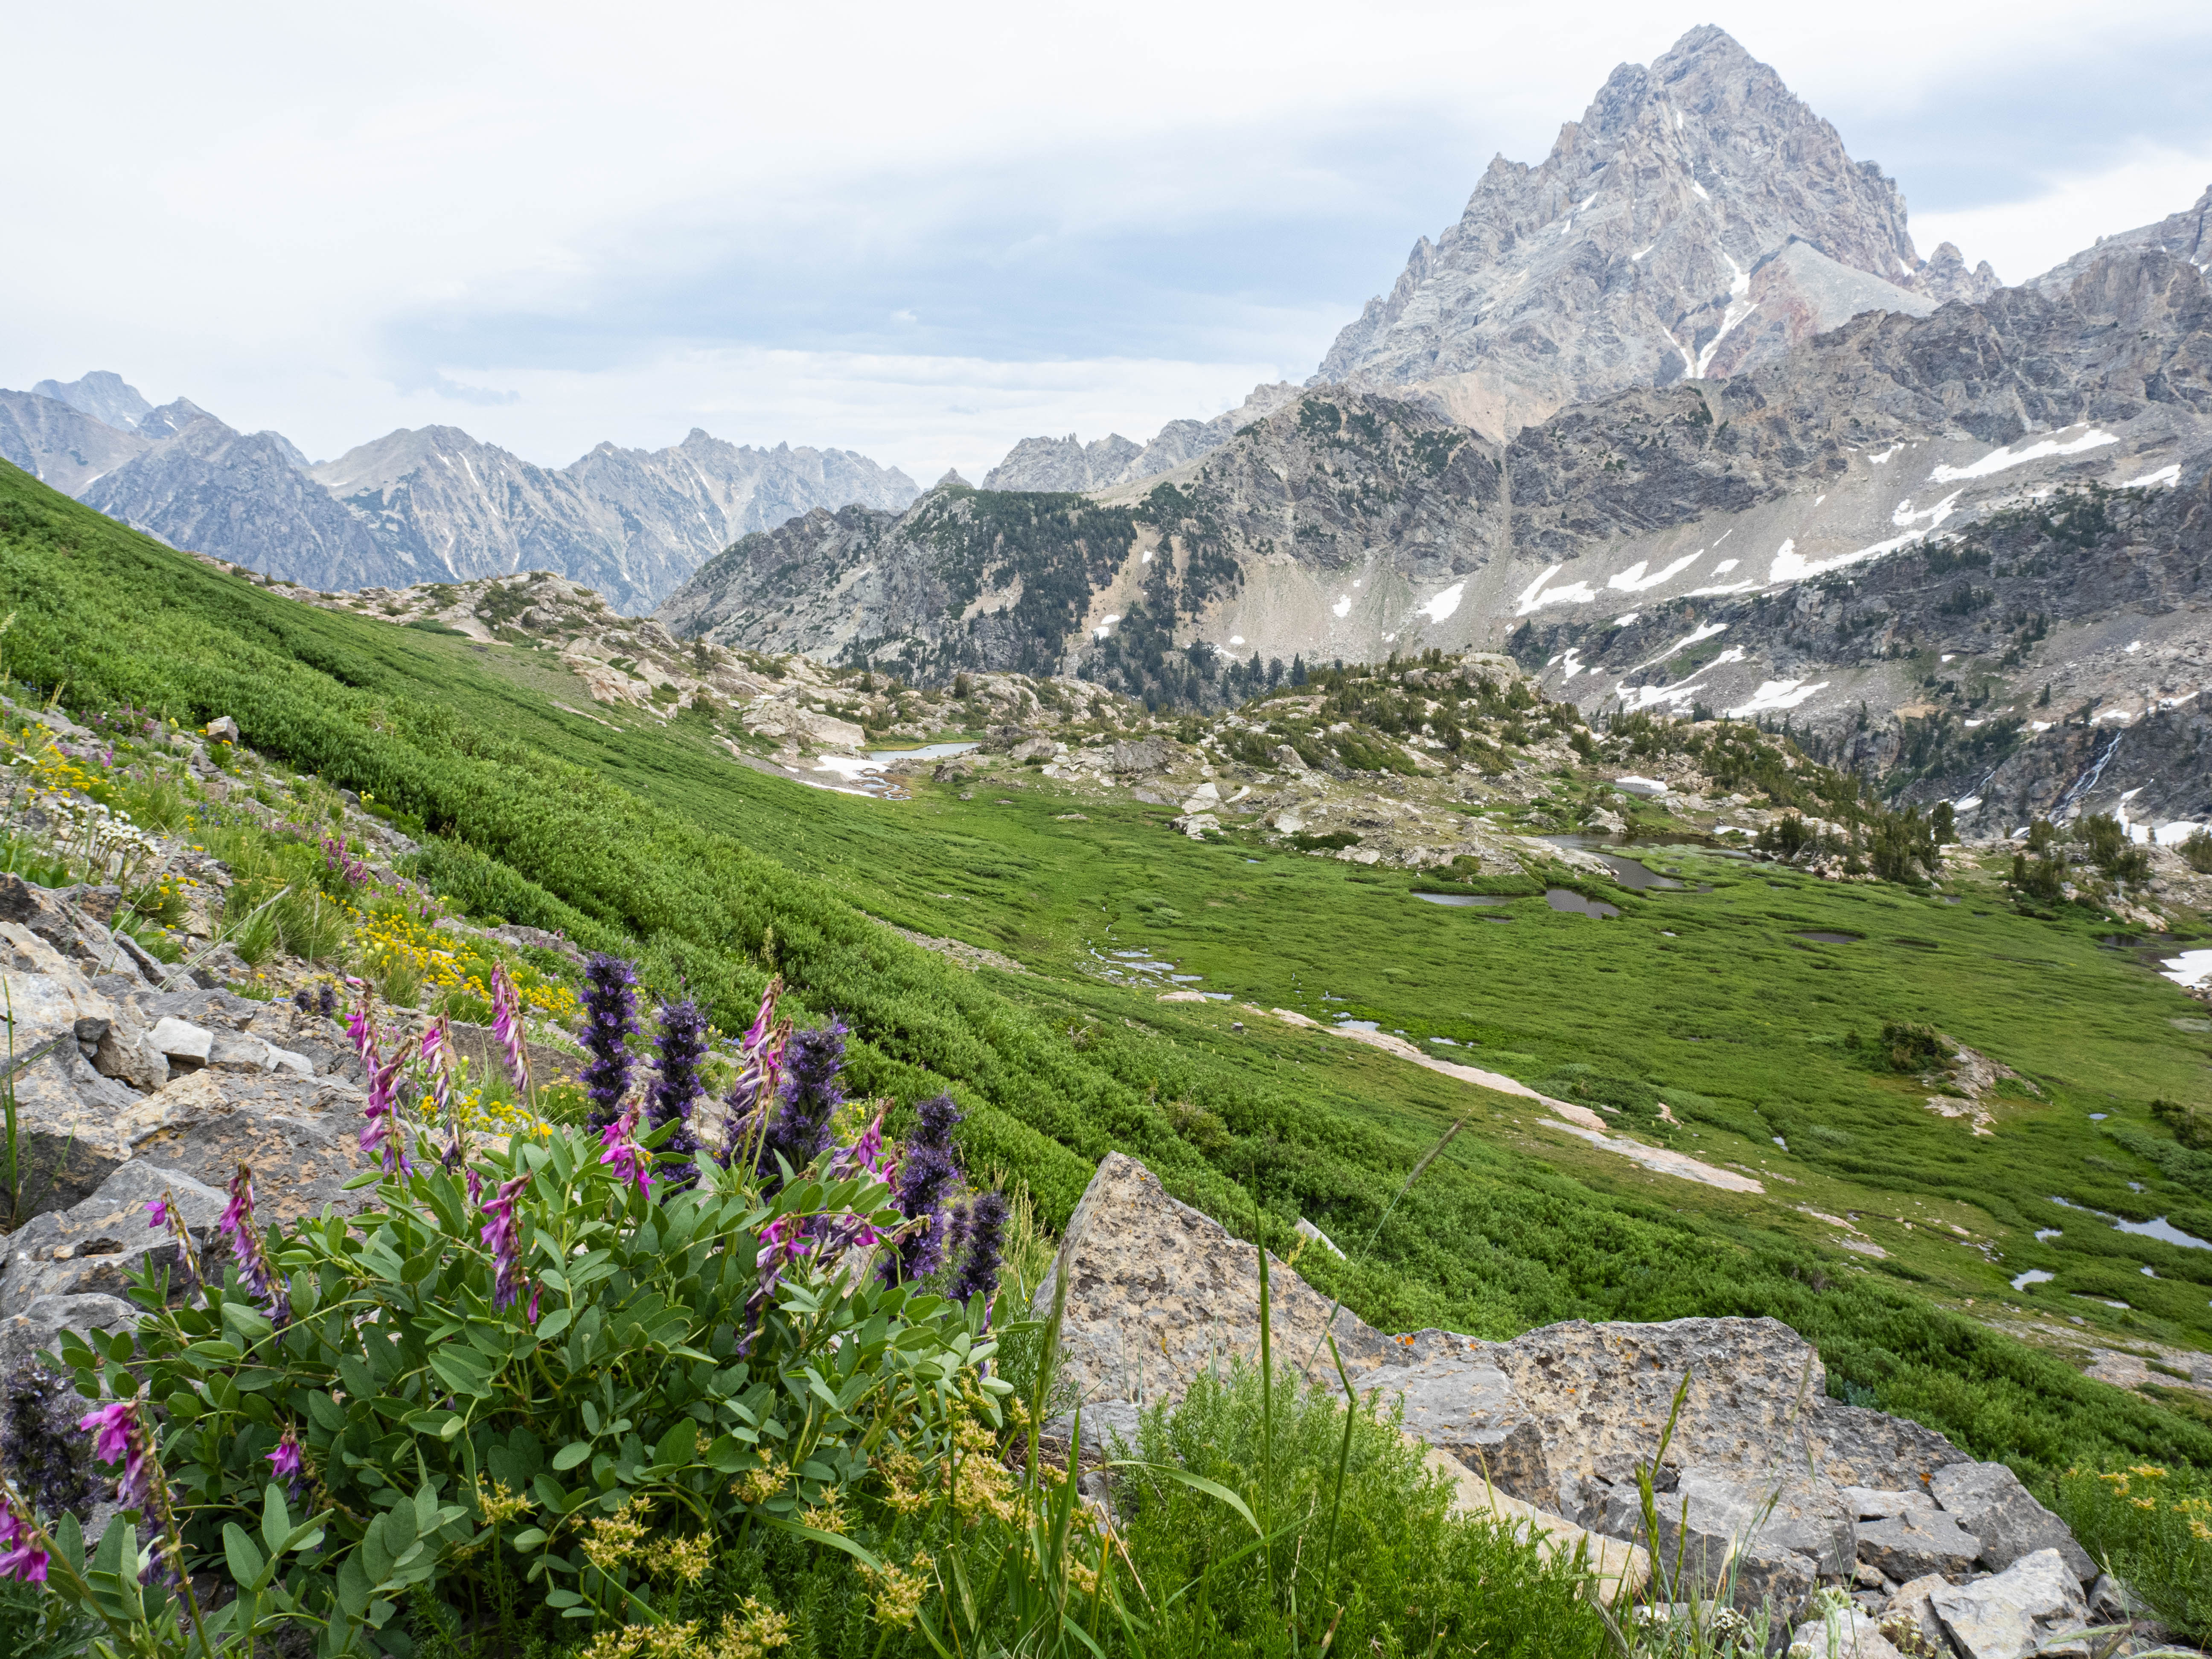 Alpine flowers along the trail